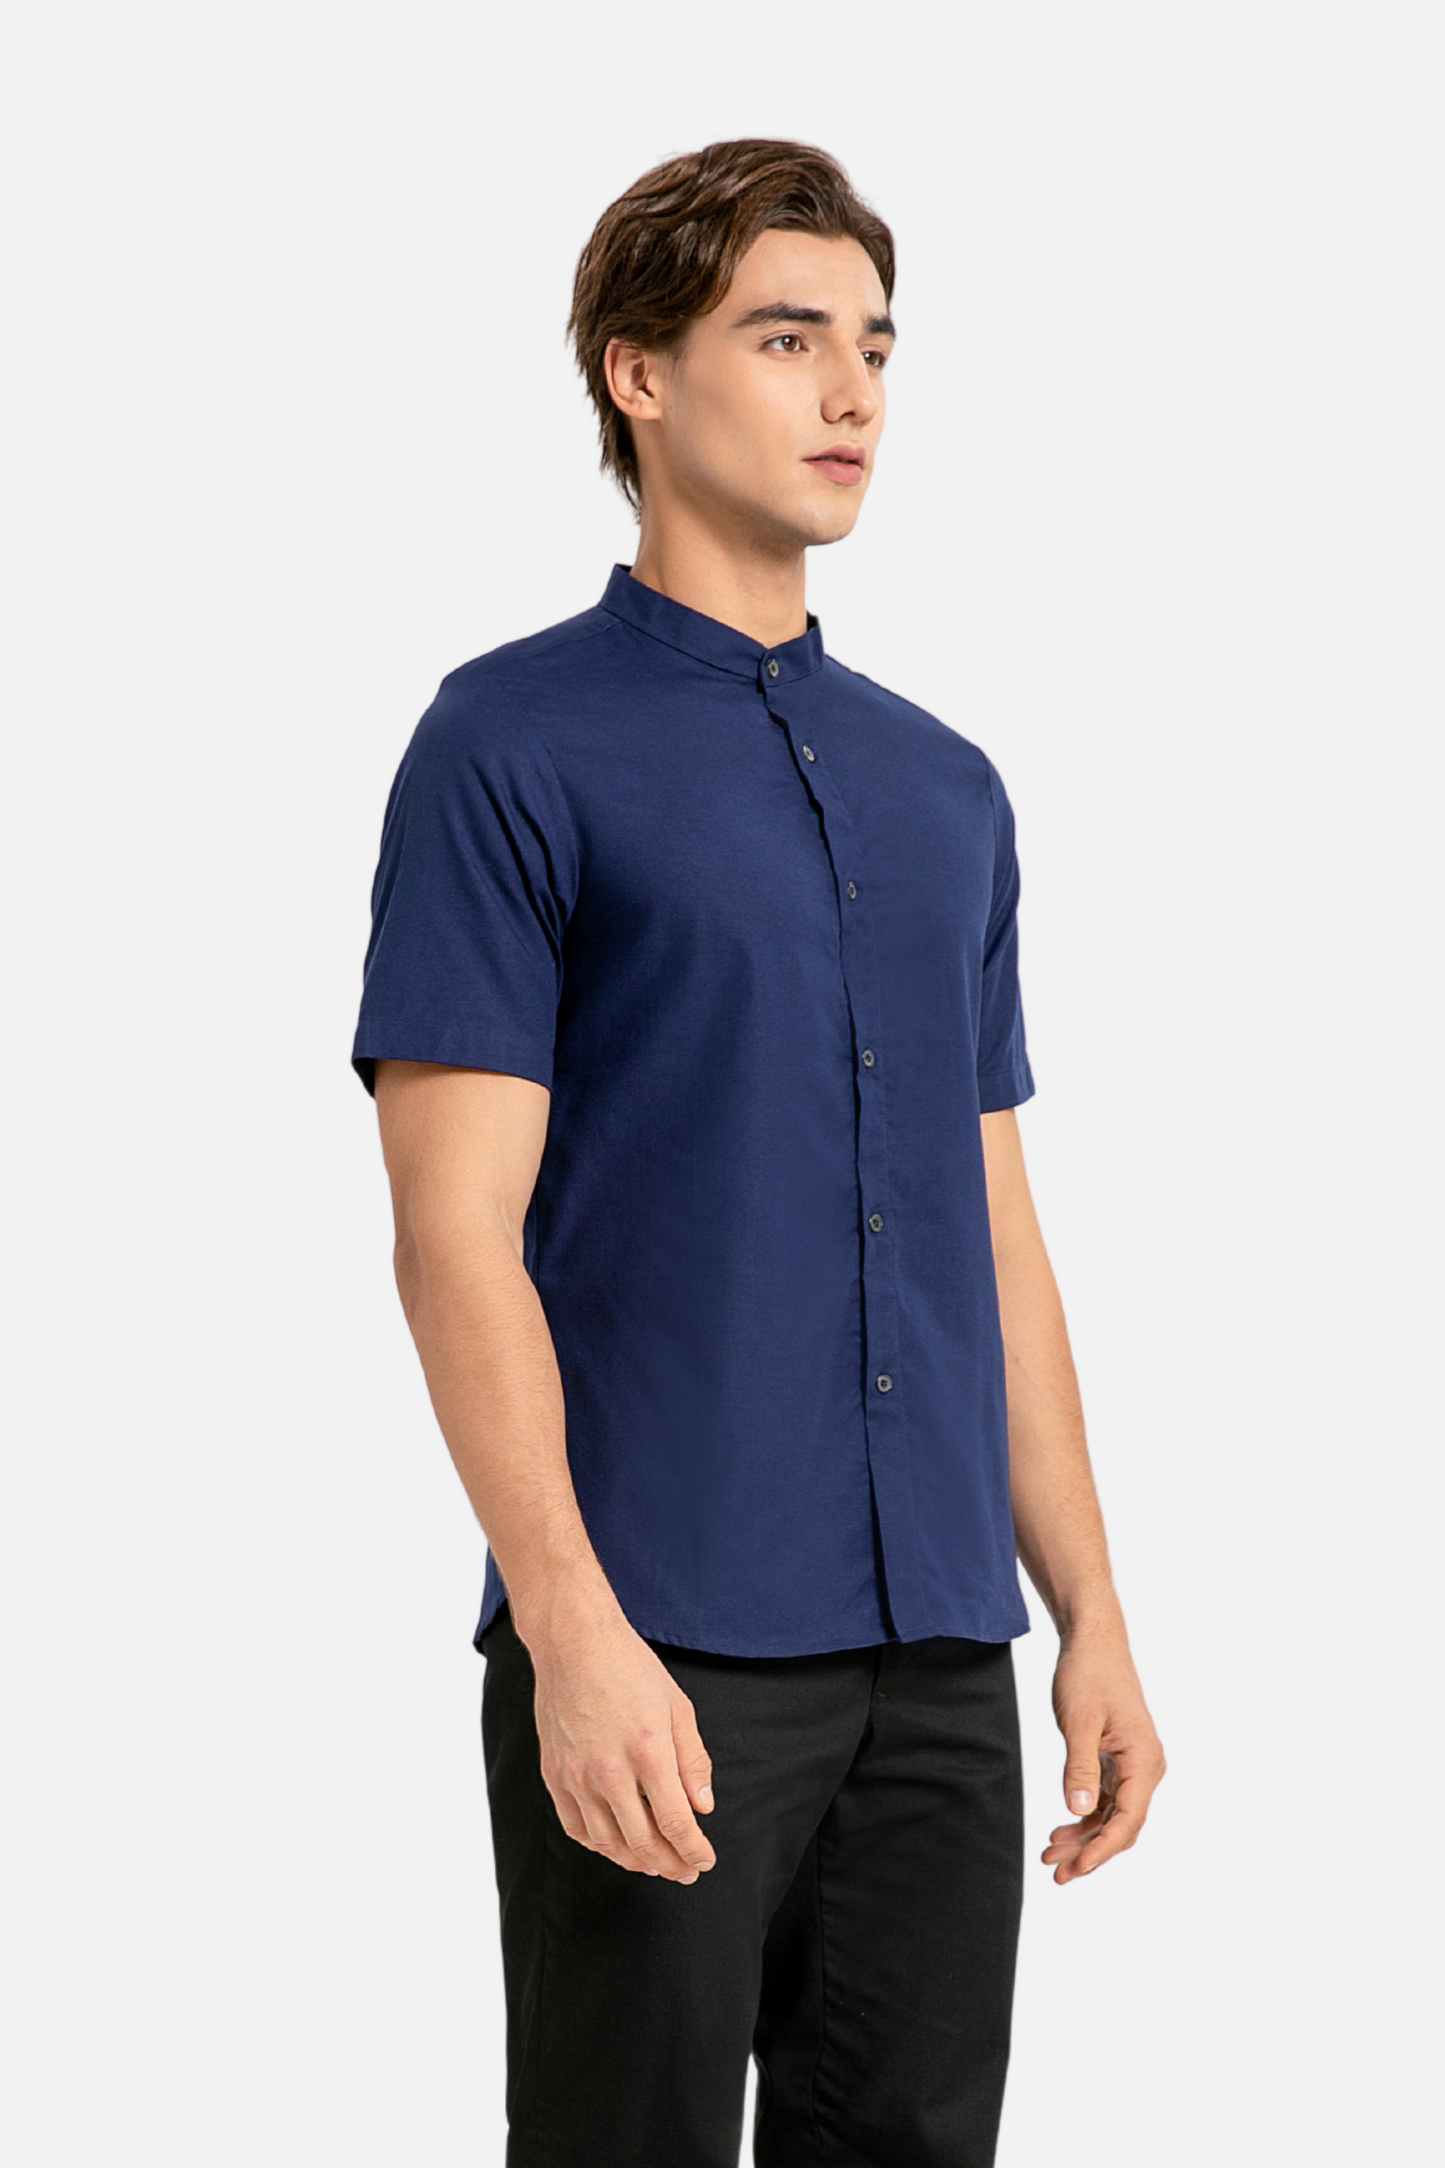 Brydan Navy Blue Shirt, Short Sleeve